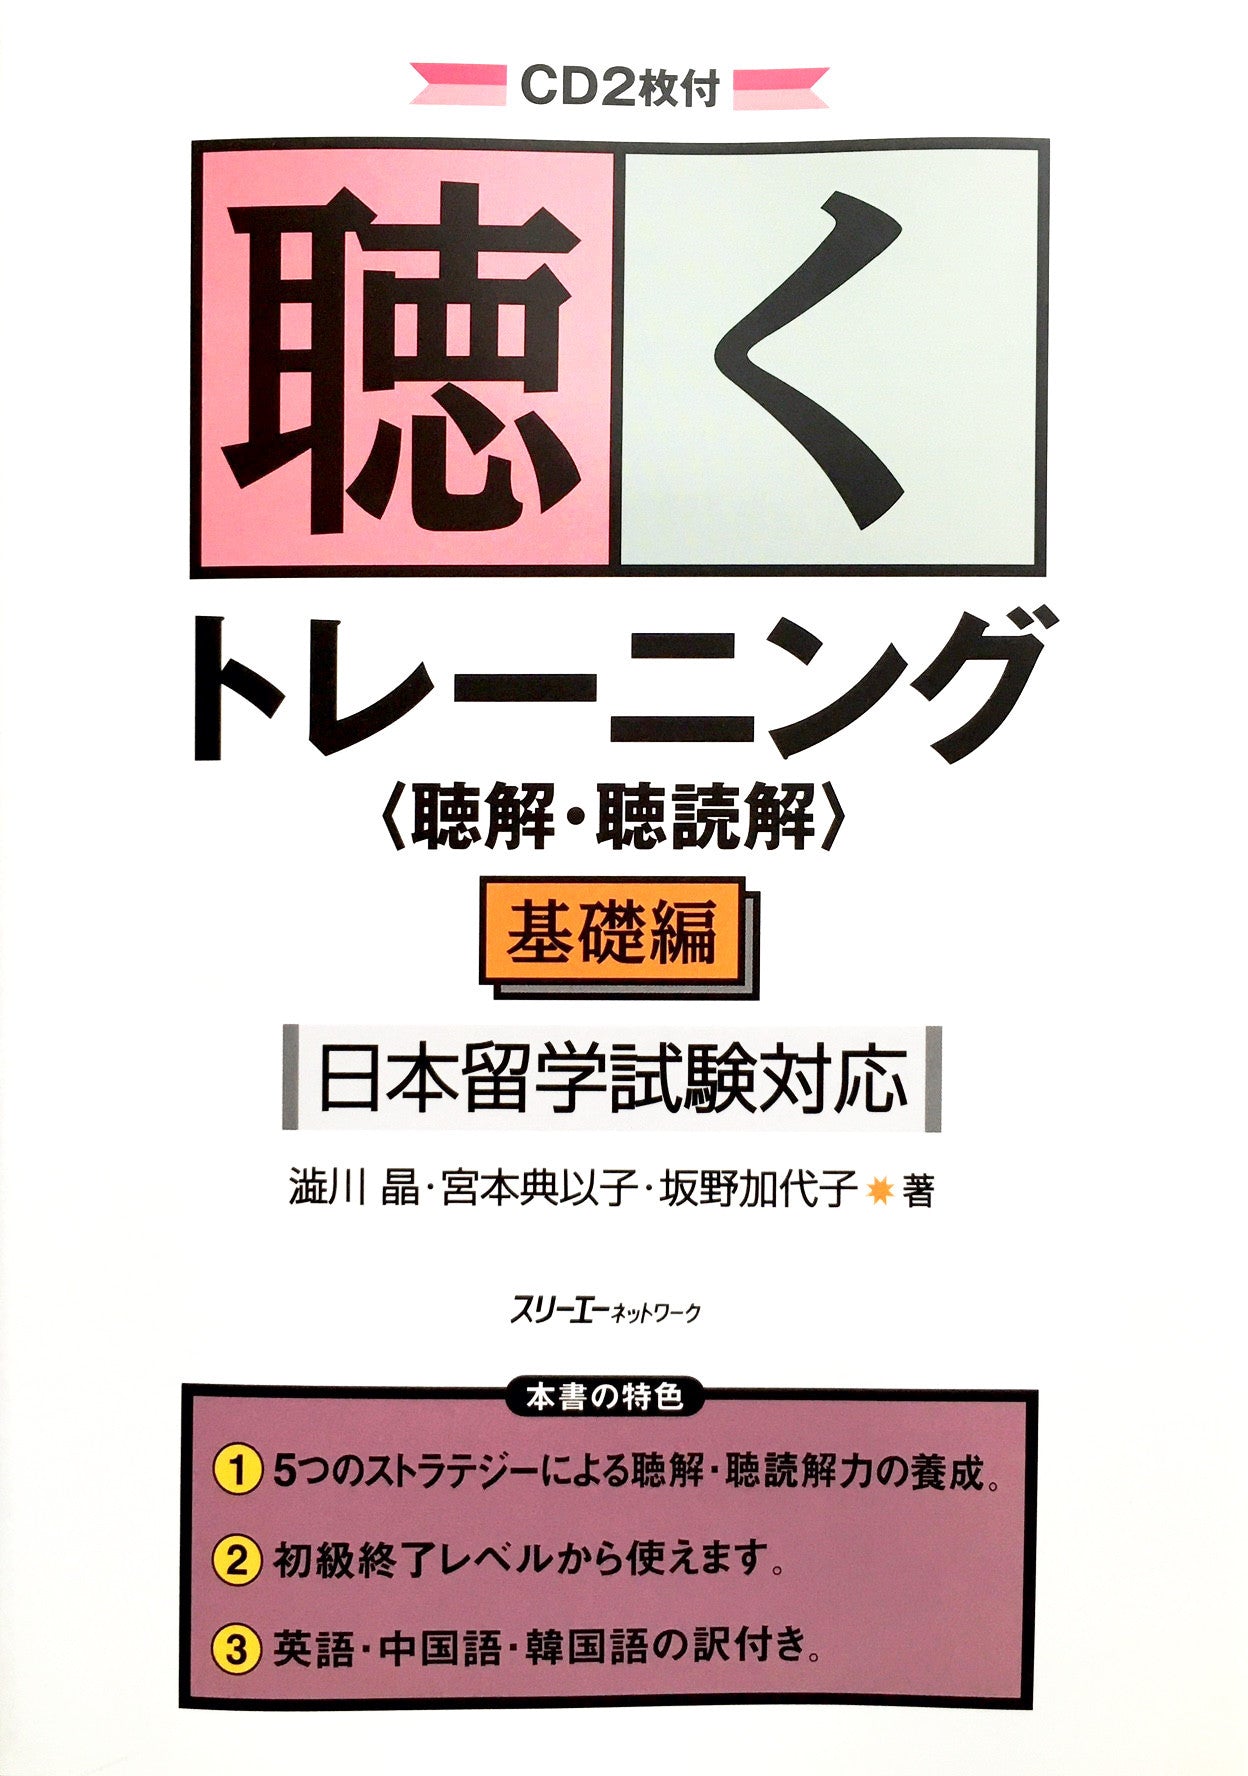 Kiku Training Listening Comprehension with 2 CDs - The Japan Shop